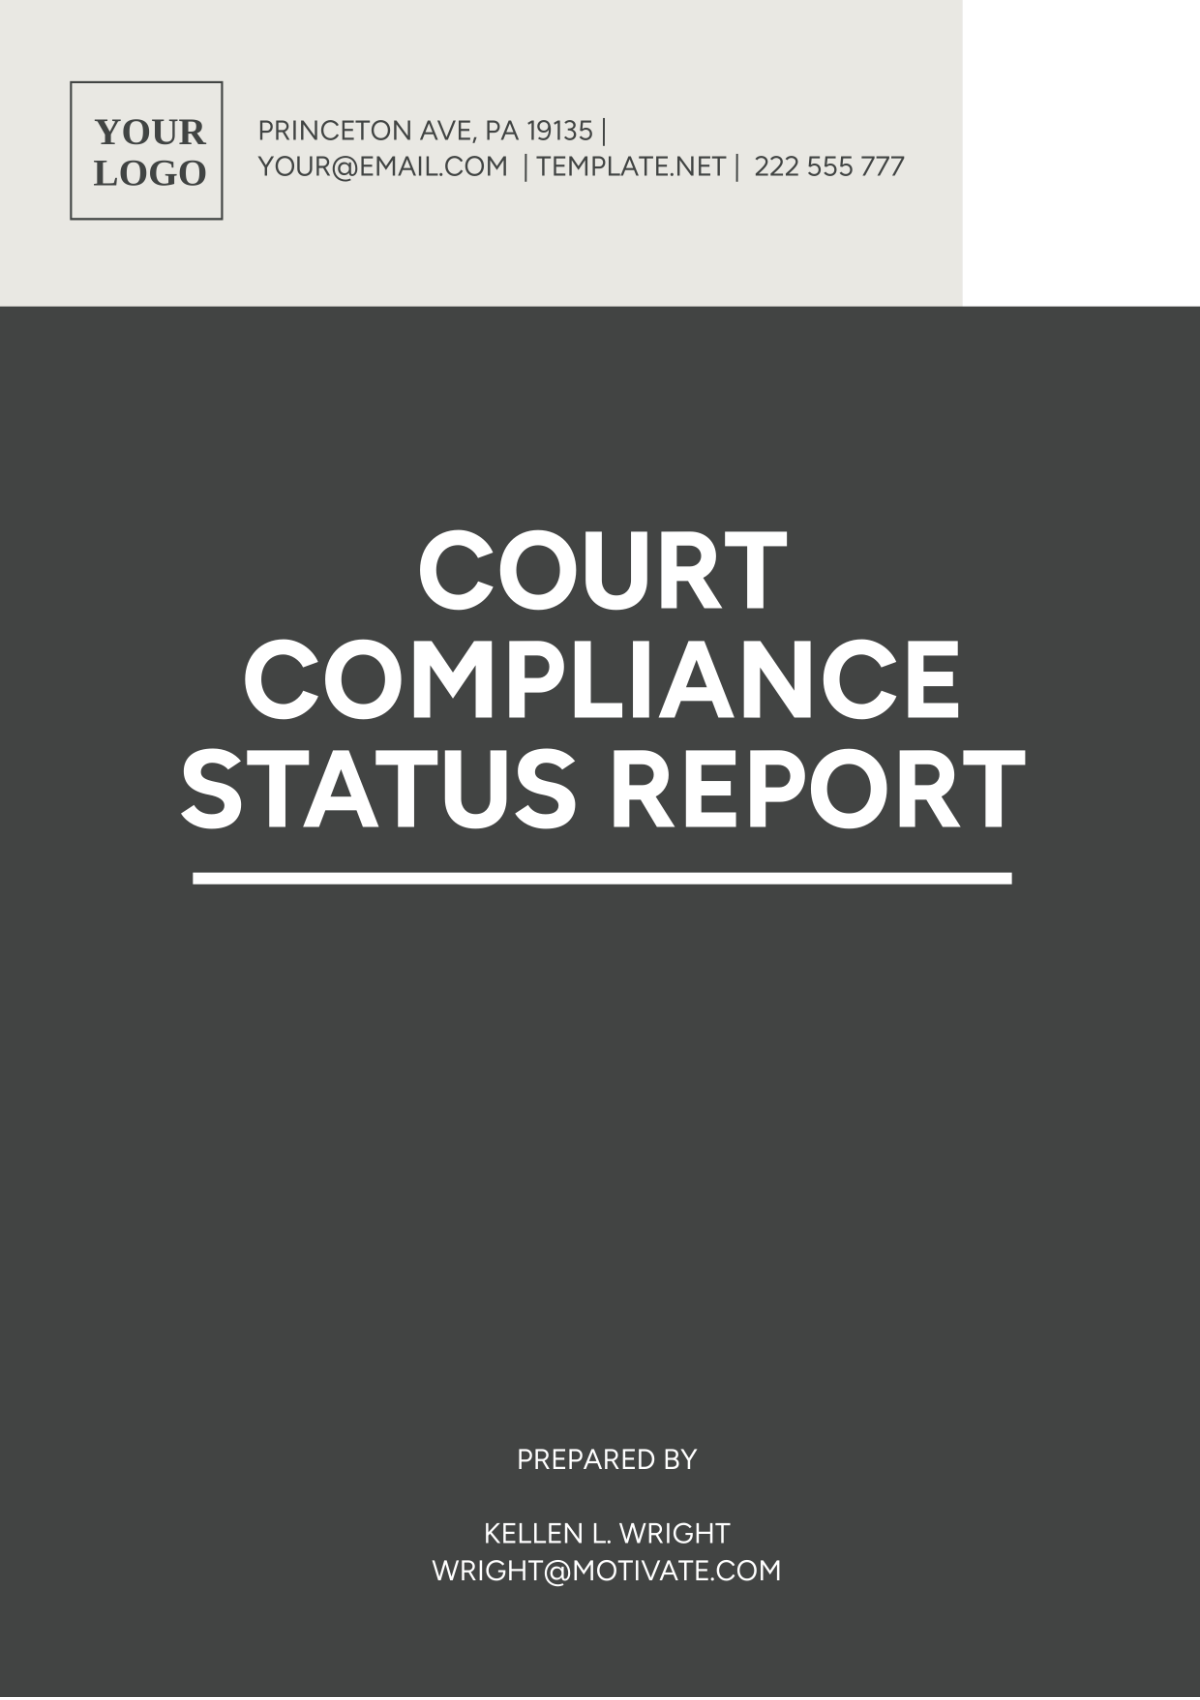 Court Compliance Status Report Template